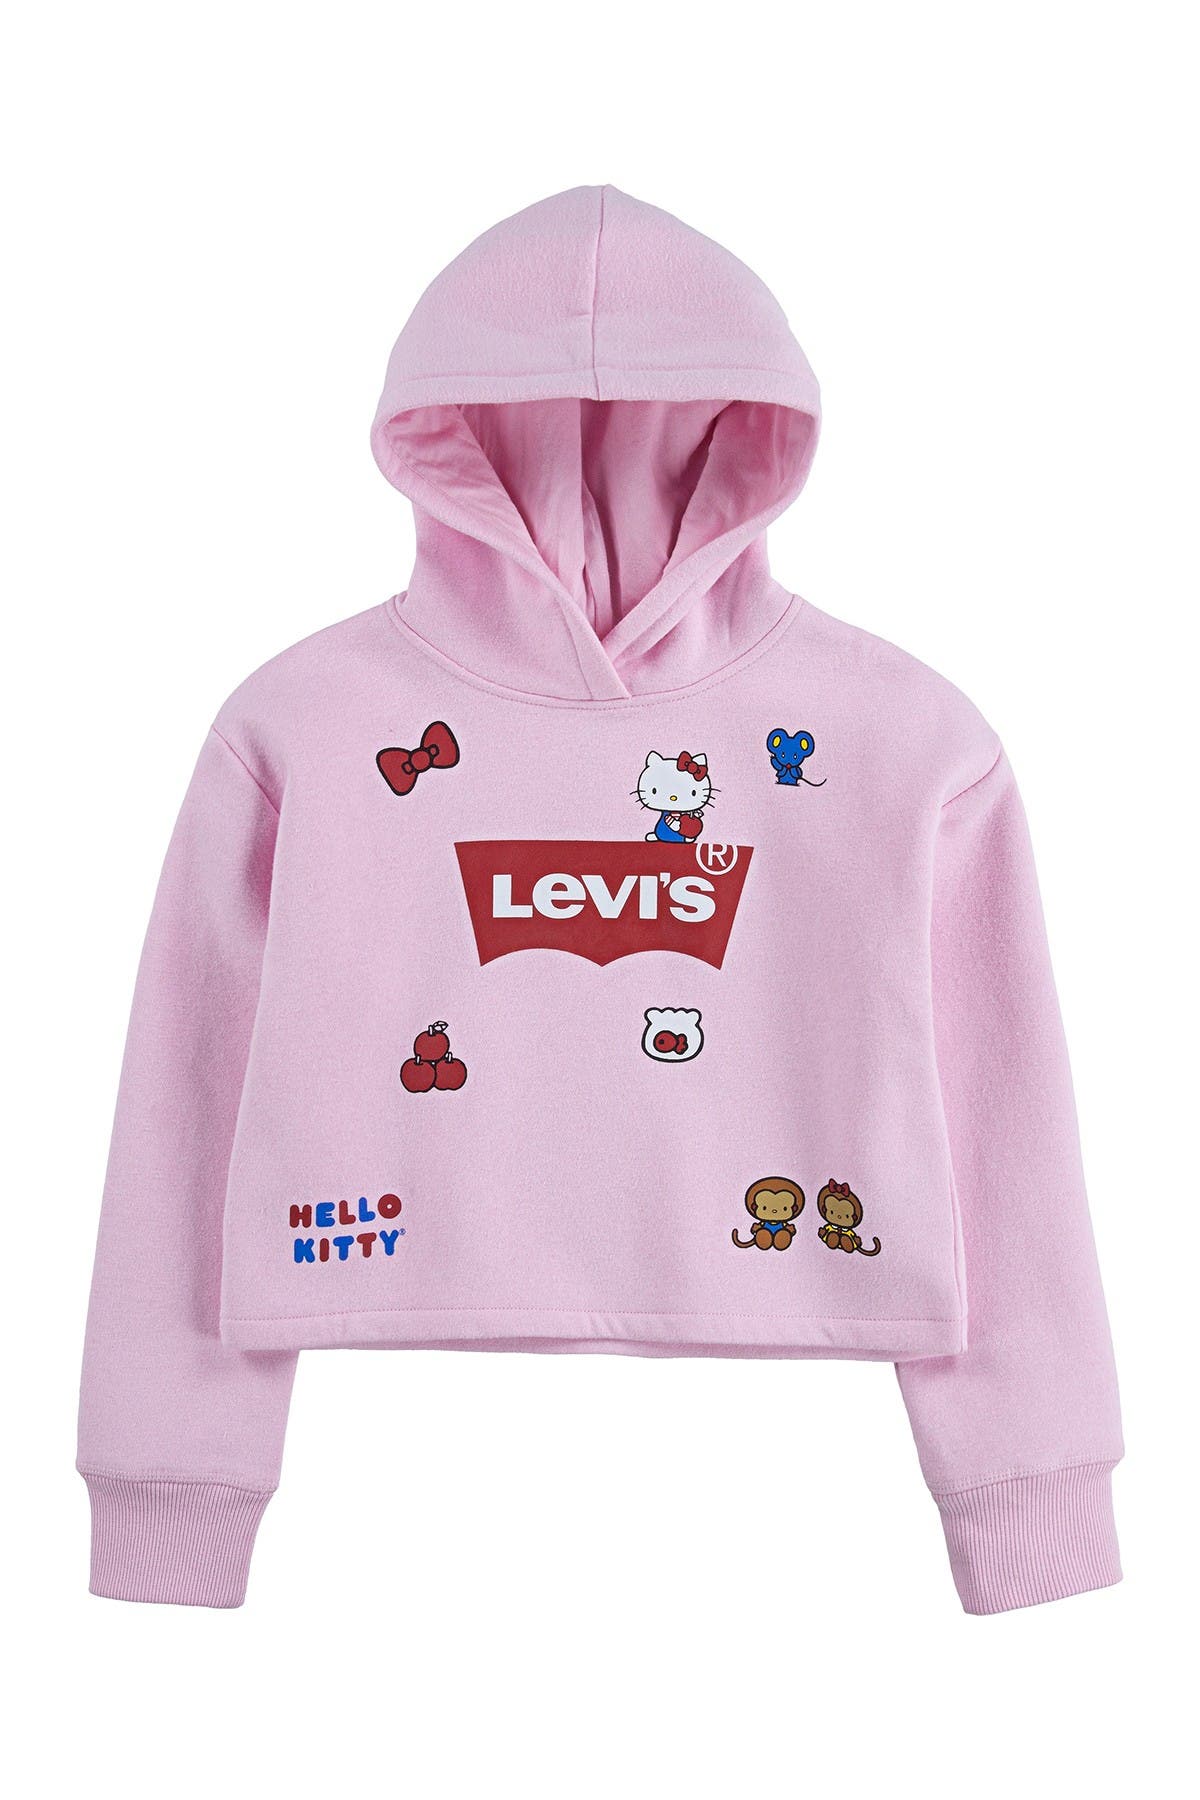 levi's hello kitty hoodie